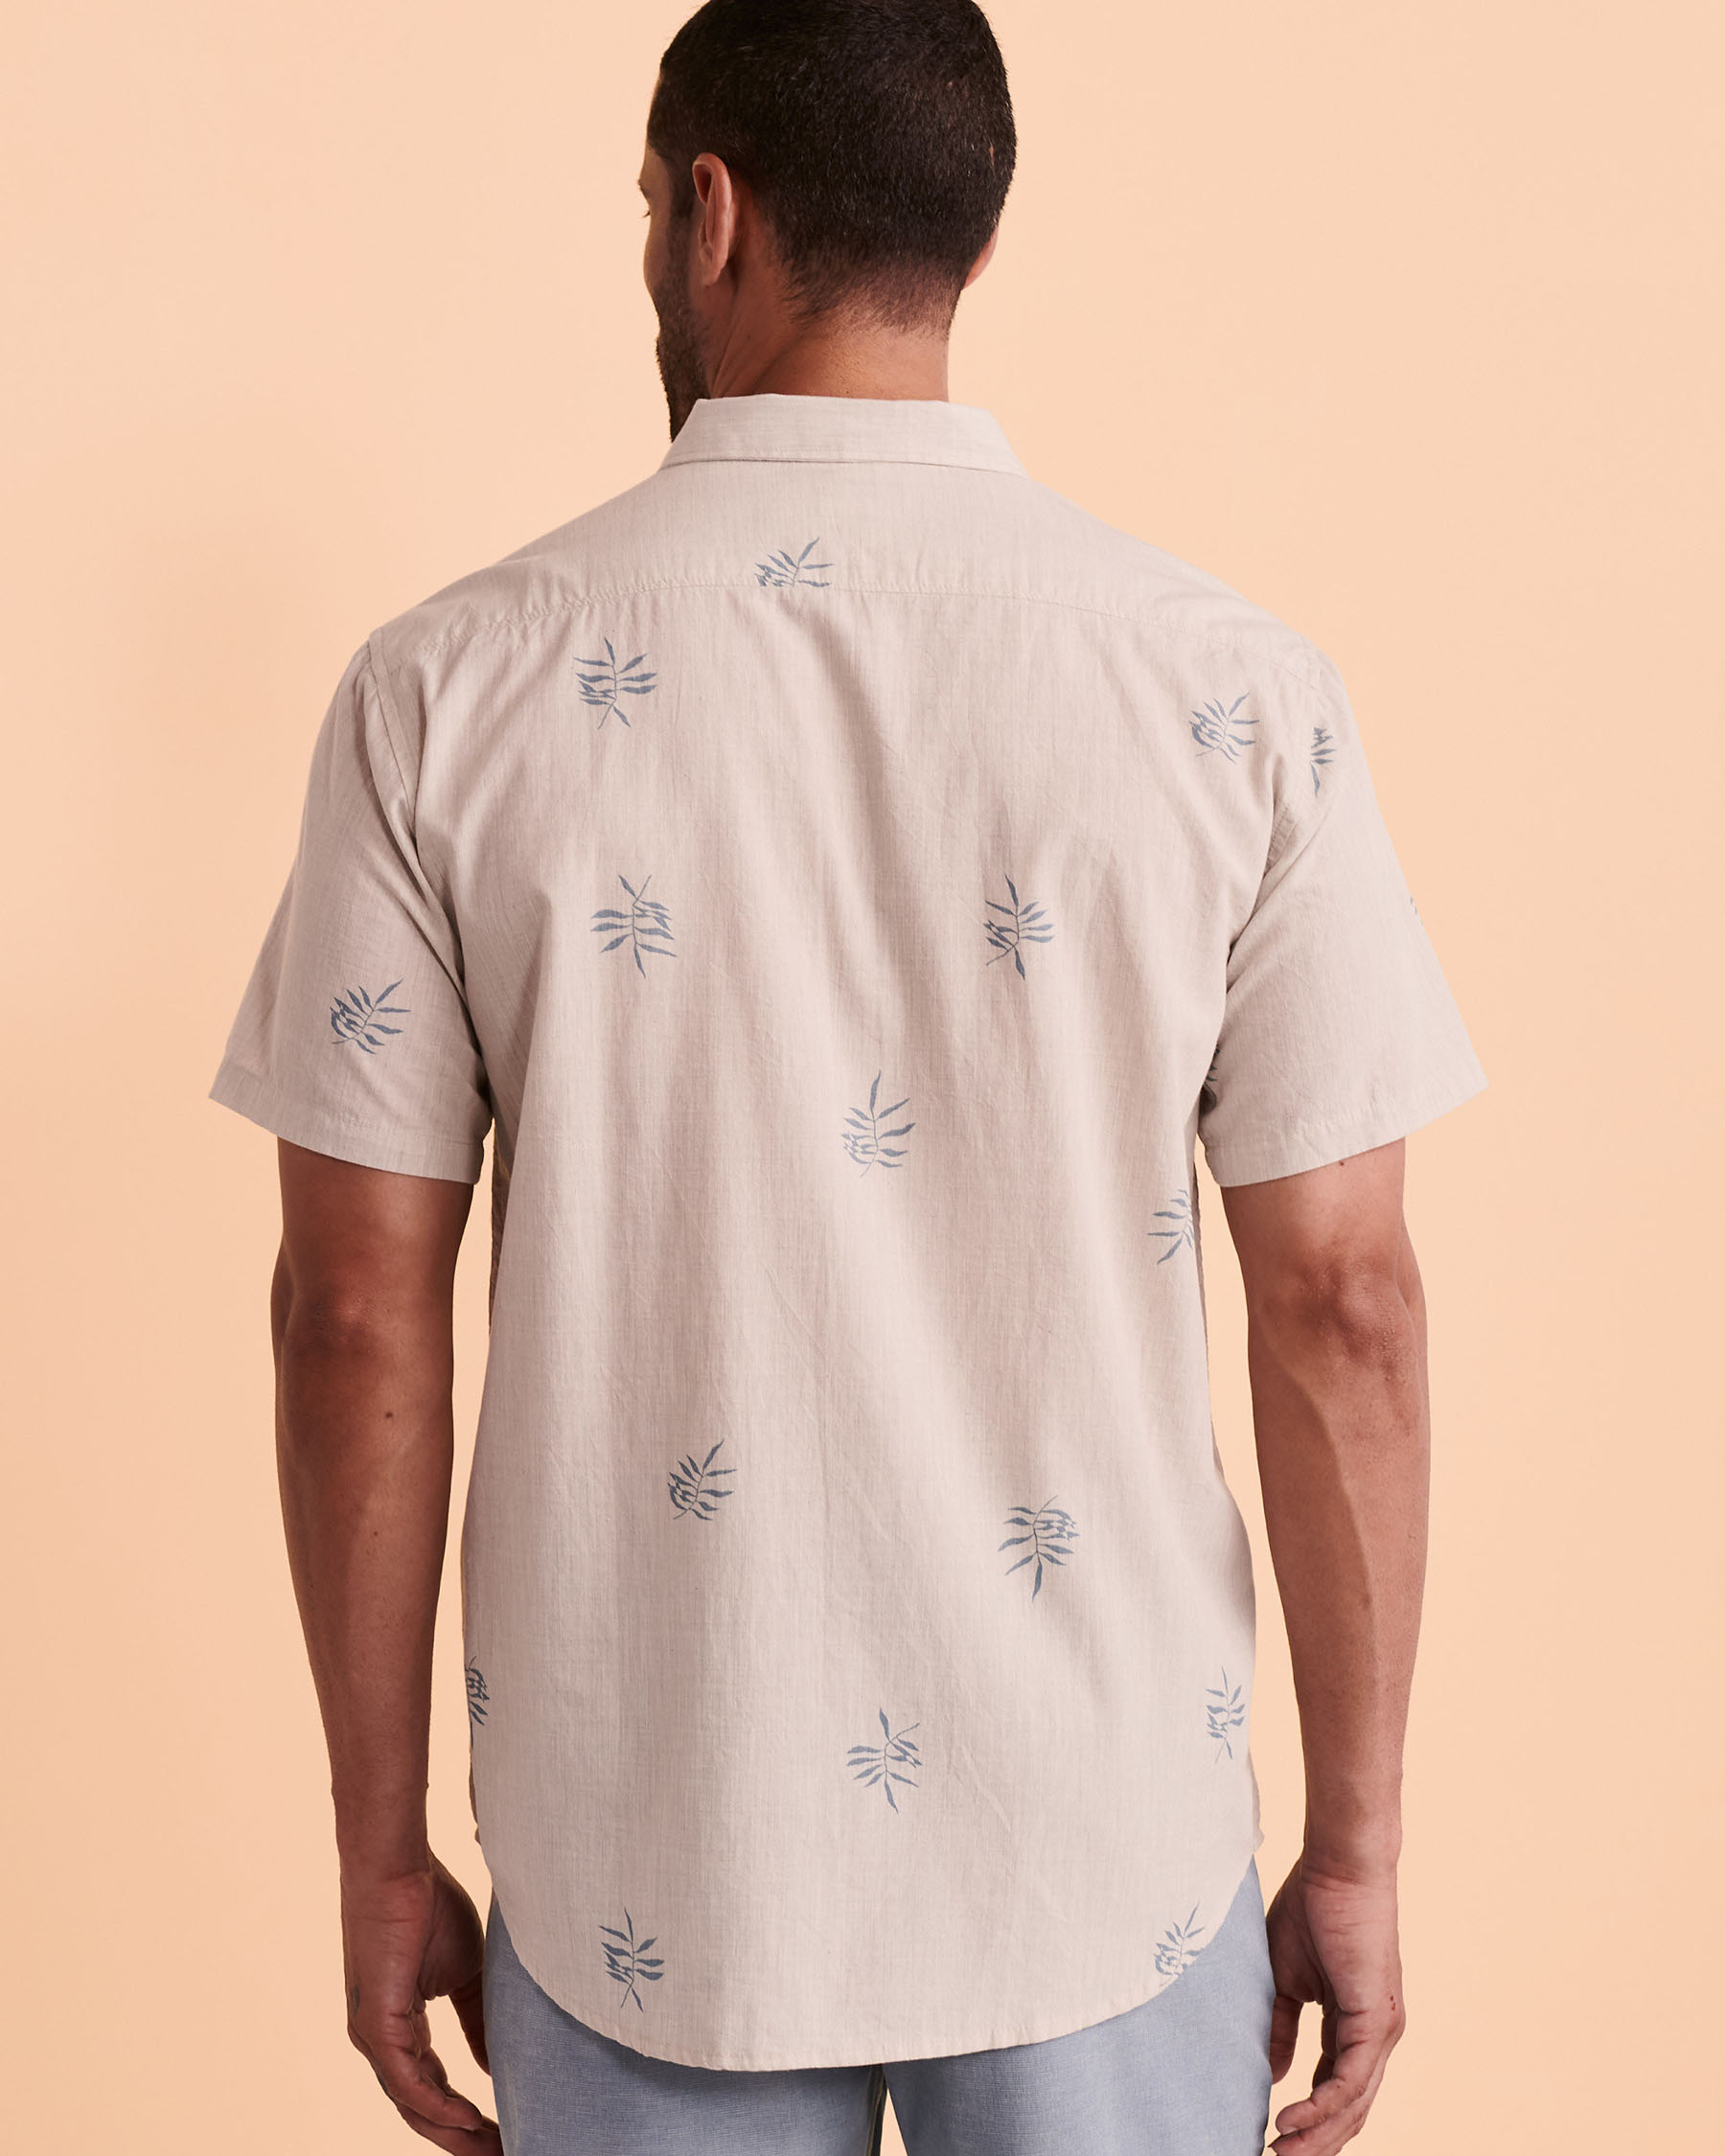 BILLABONG SUNDAYS MINI Short Sleeve Shirt Light print ABYWT00203 - View2